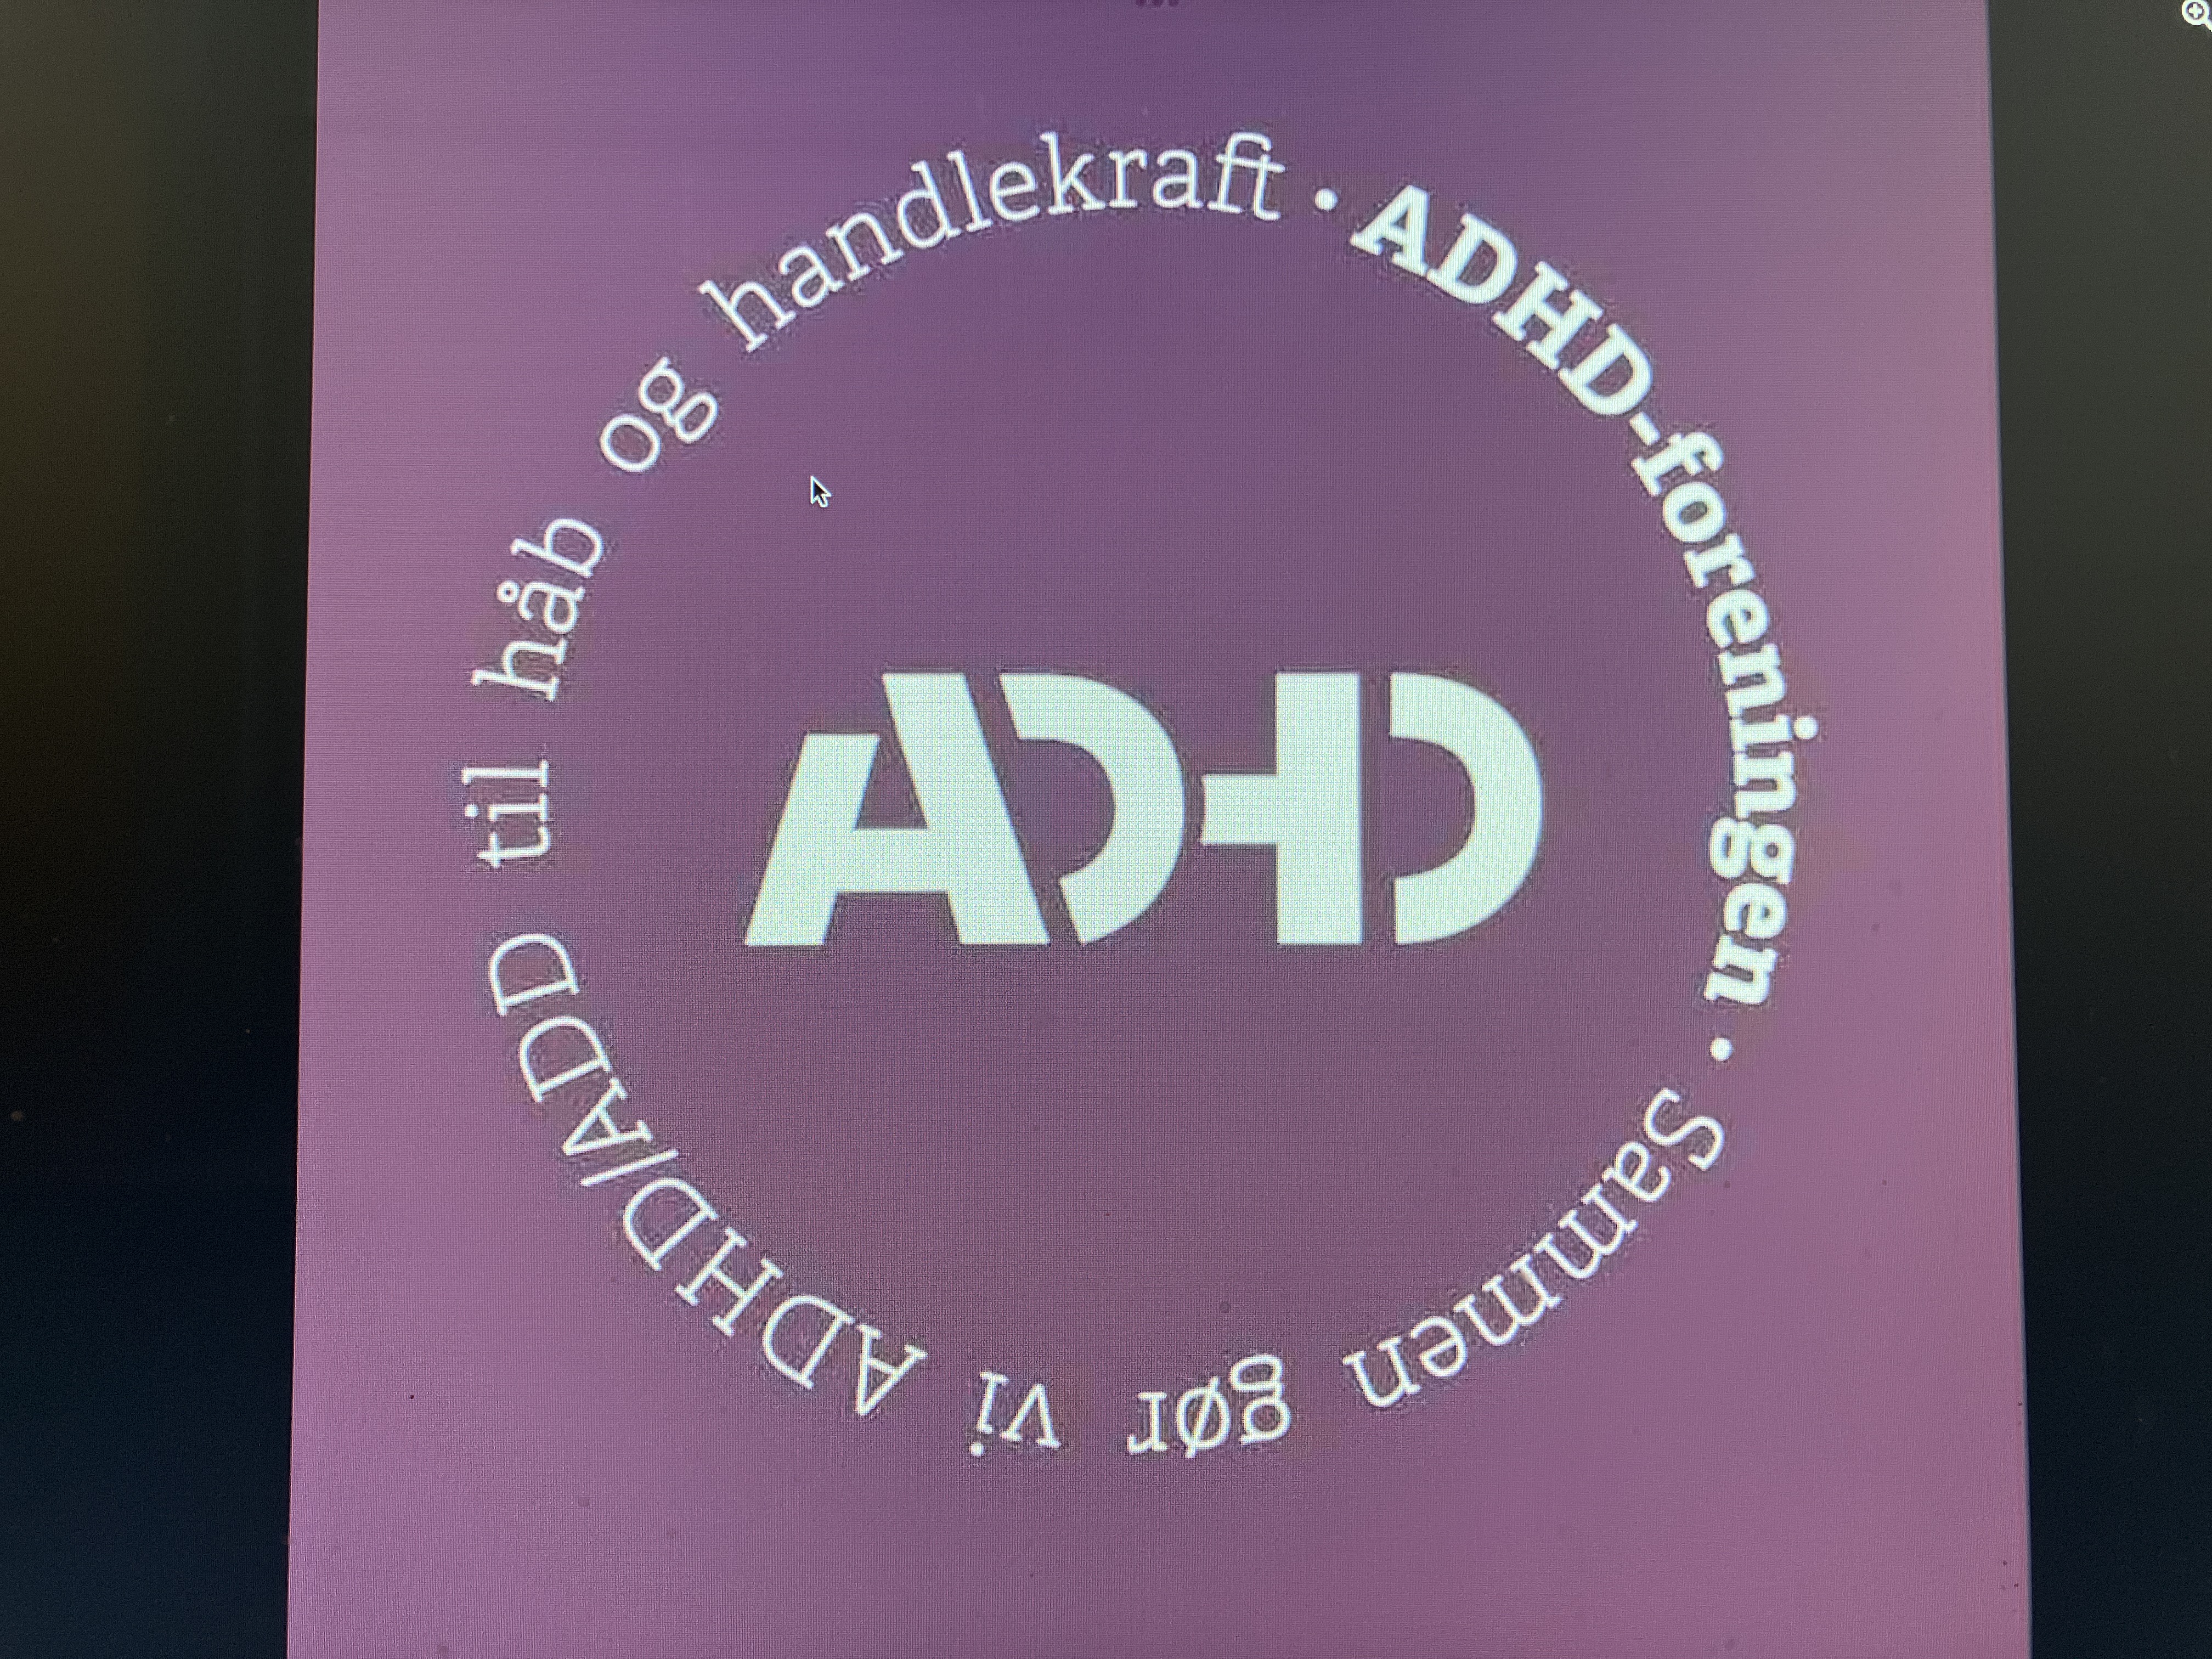 ADHD-foreningen Midt-Vestjylland